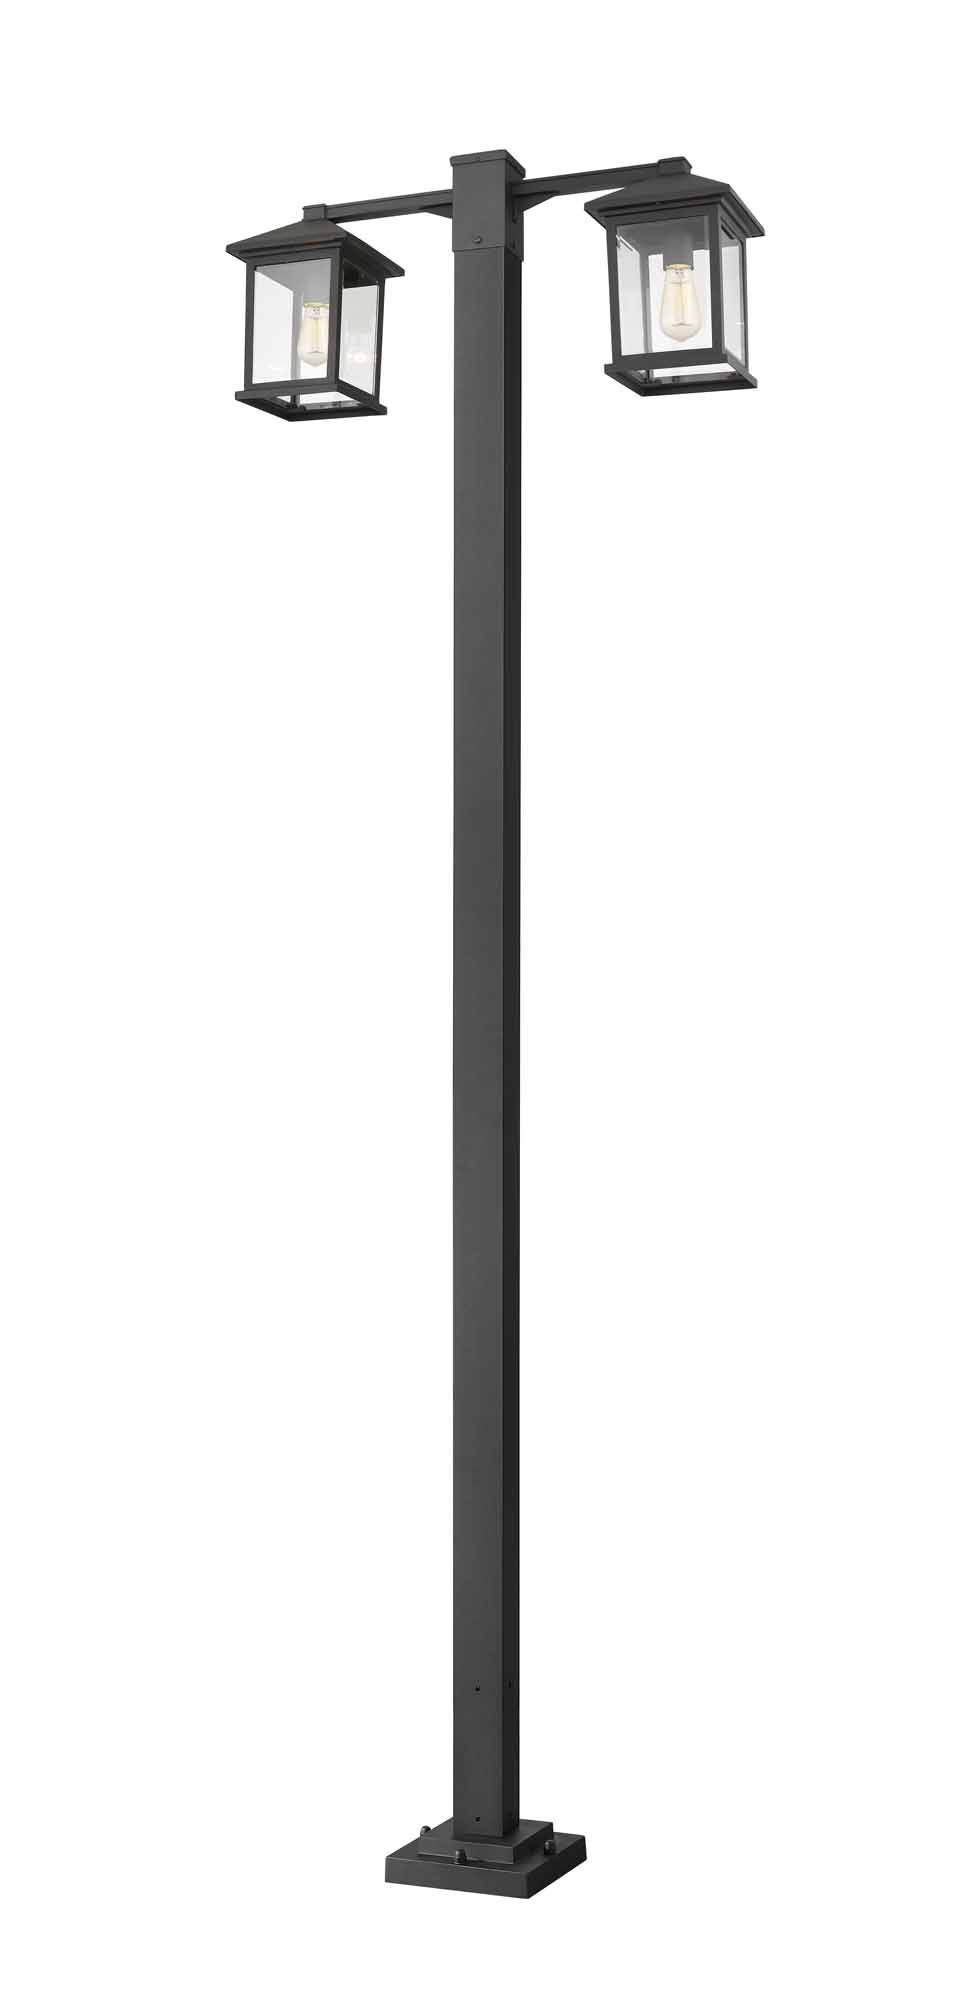 Black Finish with Clear Beveled Glass 18.50 One Light Outdoor Post Lantern Z-Lite 531PHBR-BK Portland